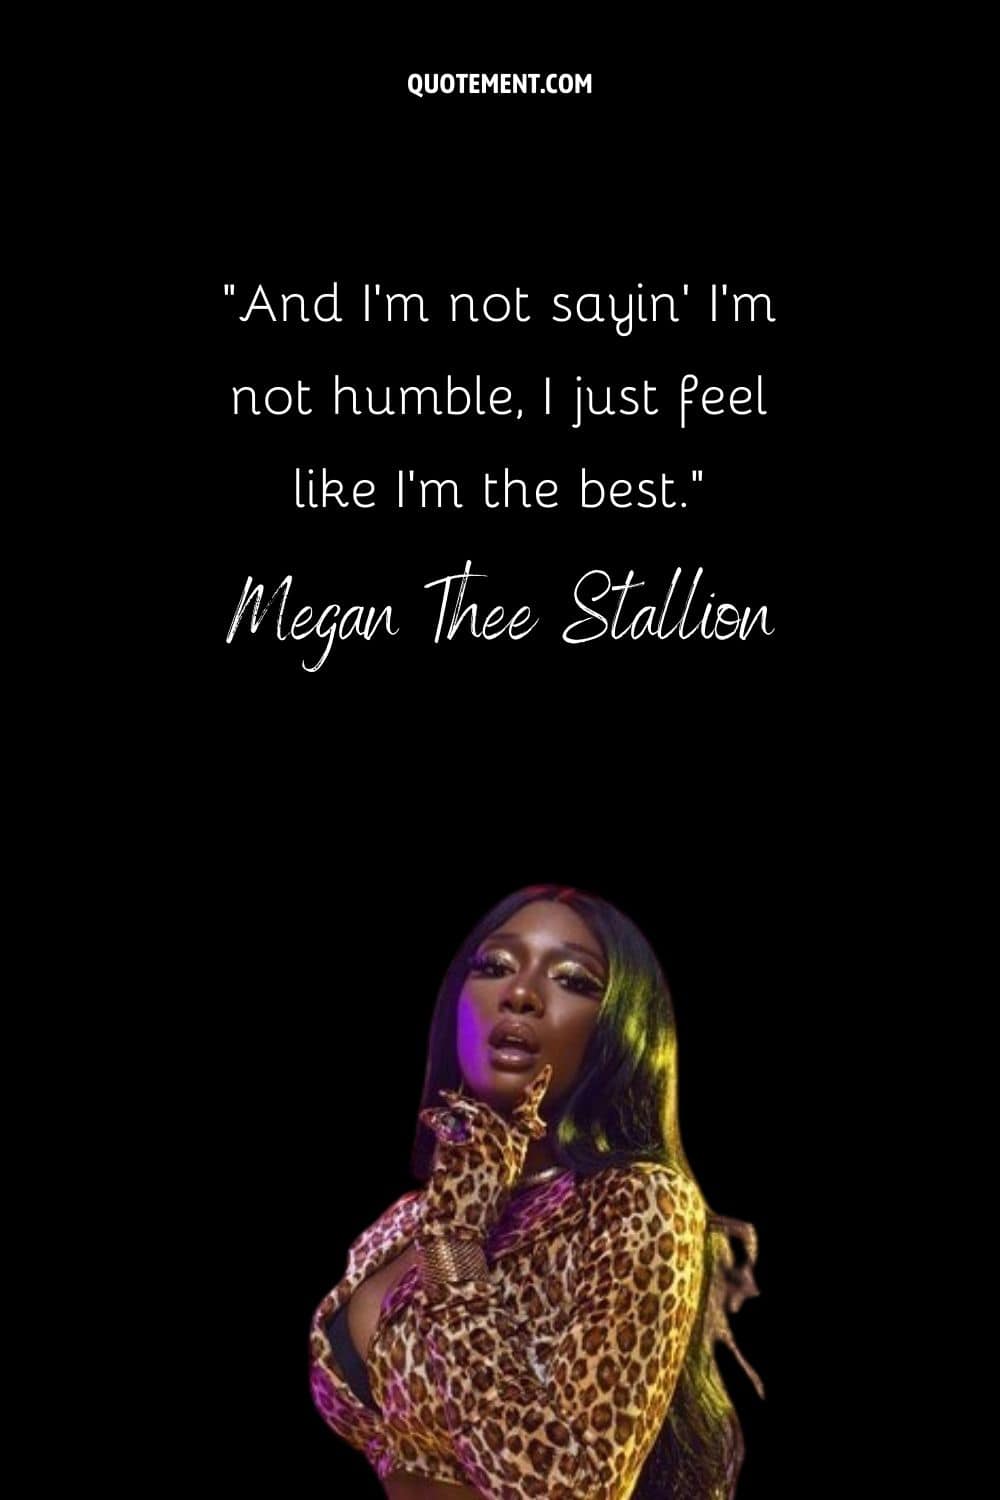 “And I'm not sayin' I'm not humble, I just feel like I'm the best.” — Megan Thee Stallion